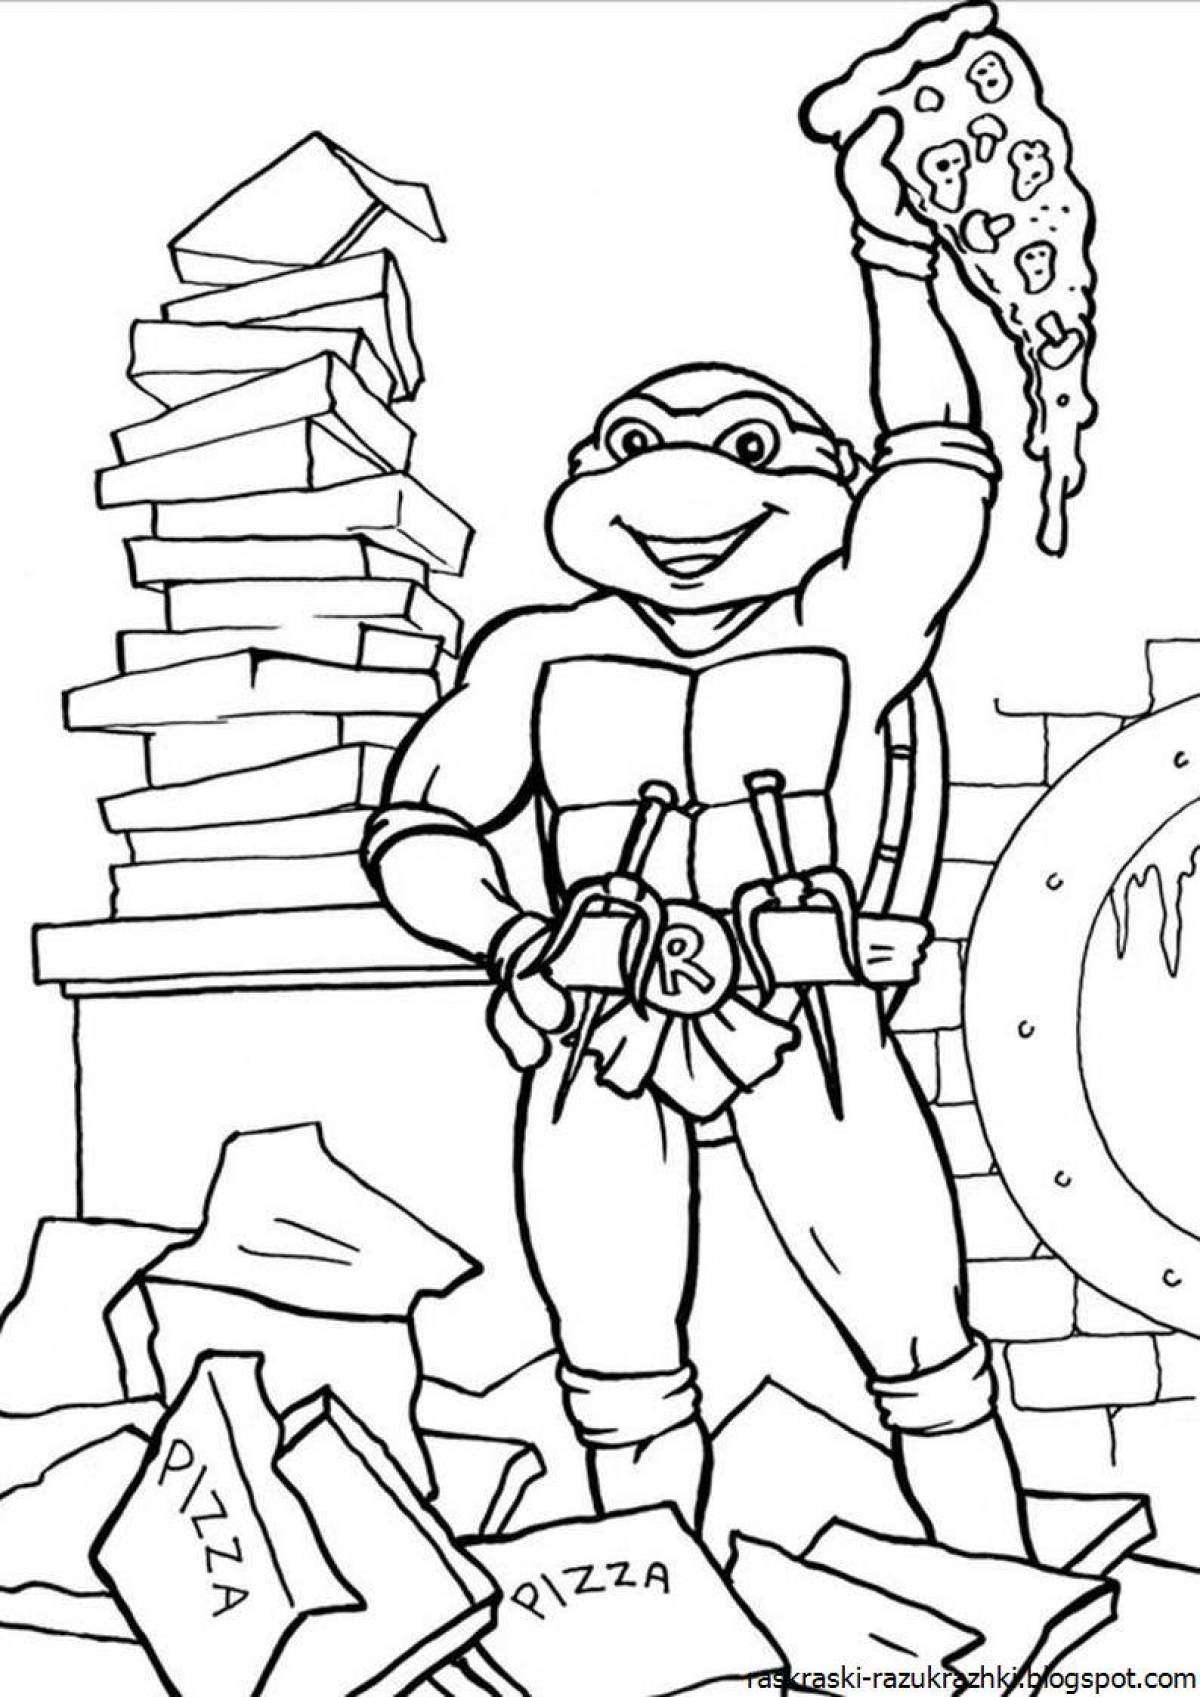 Glorious Teenage Mutant Ninja Turtle coloring book for kids